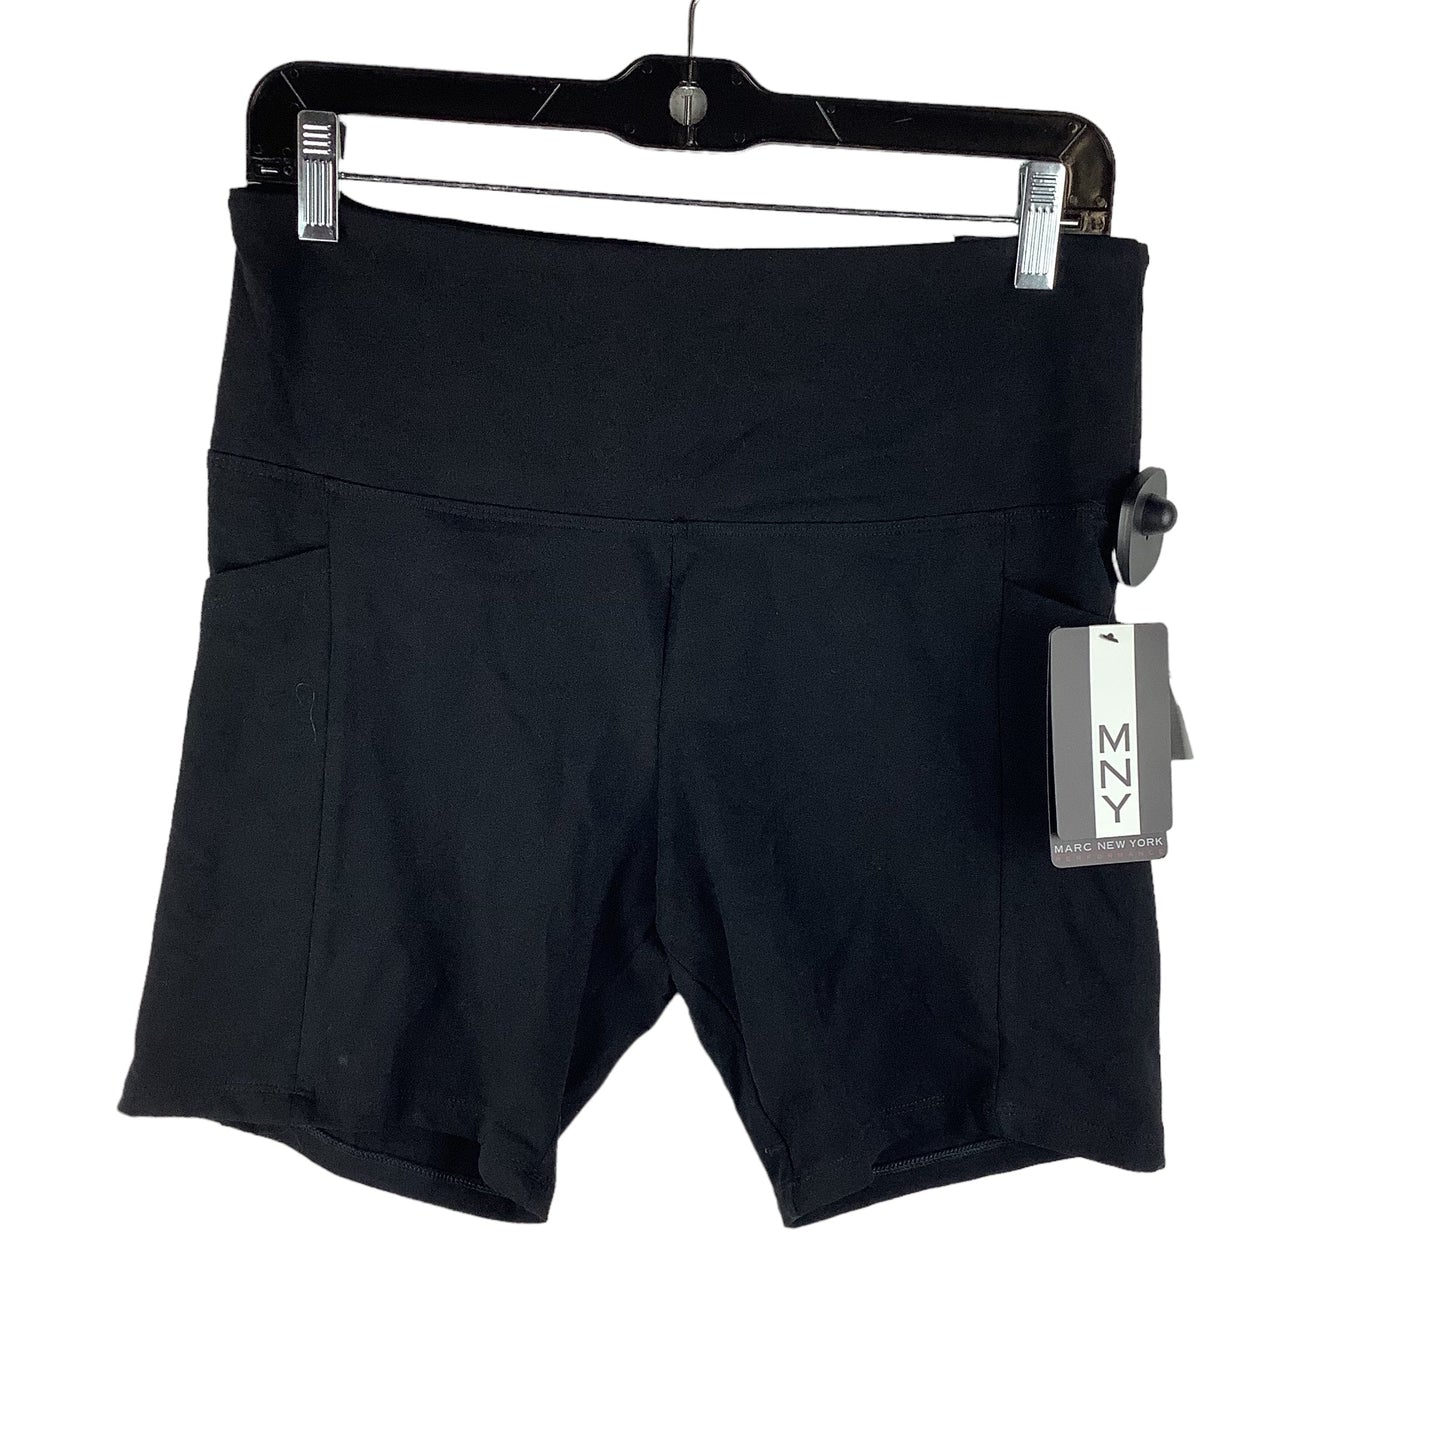 Black Athletic Shorts Marc New York, Size L